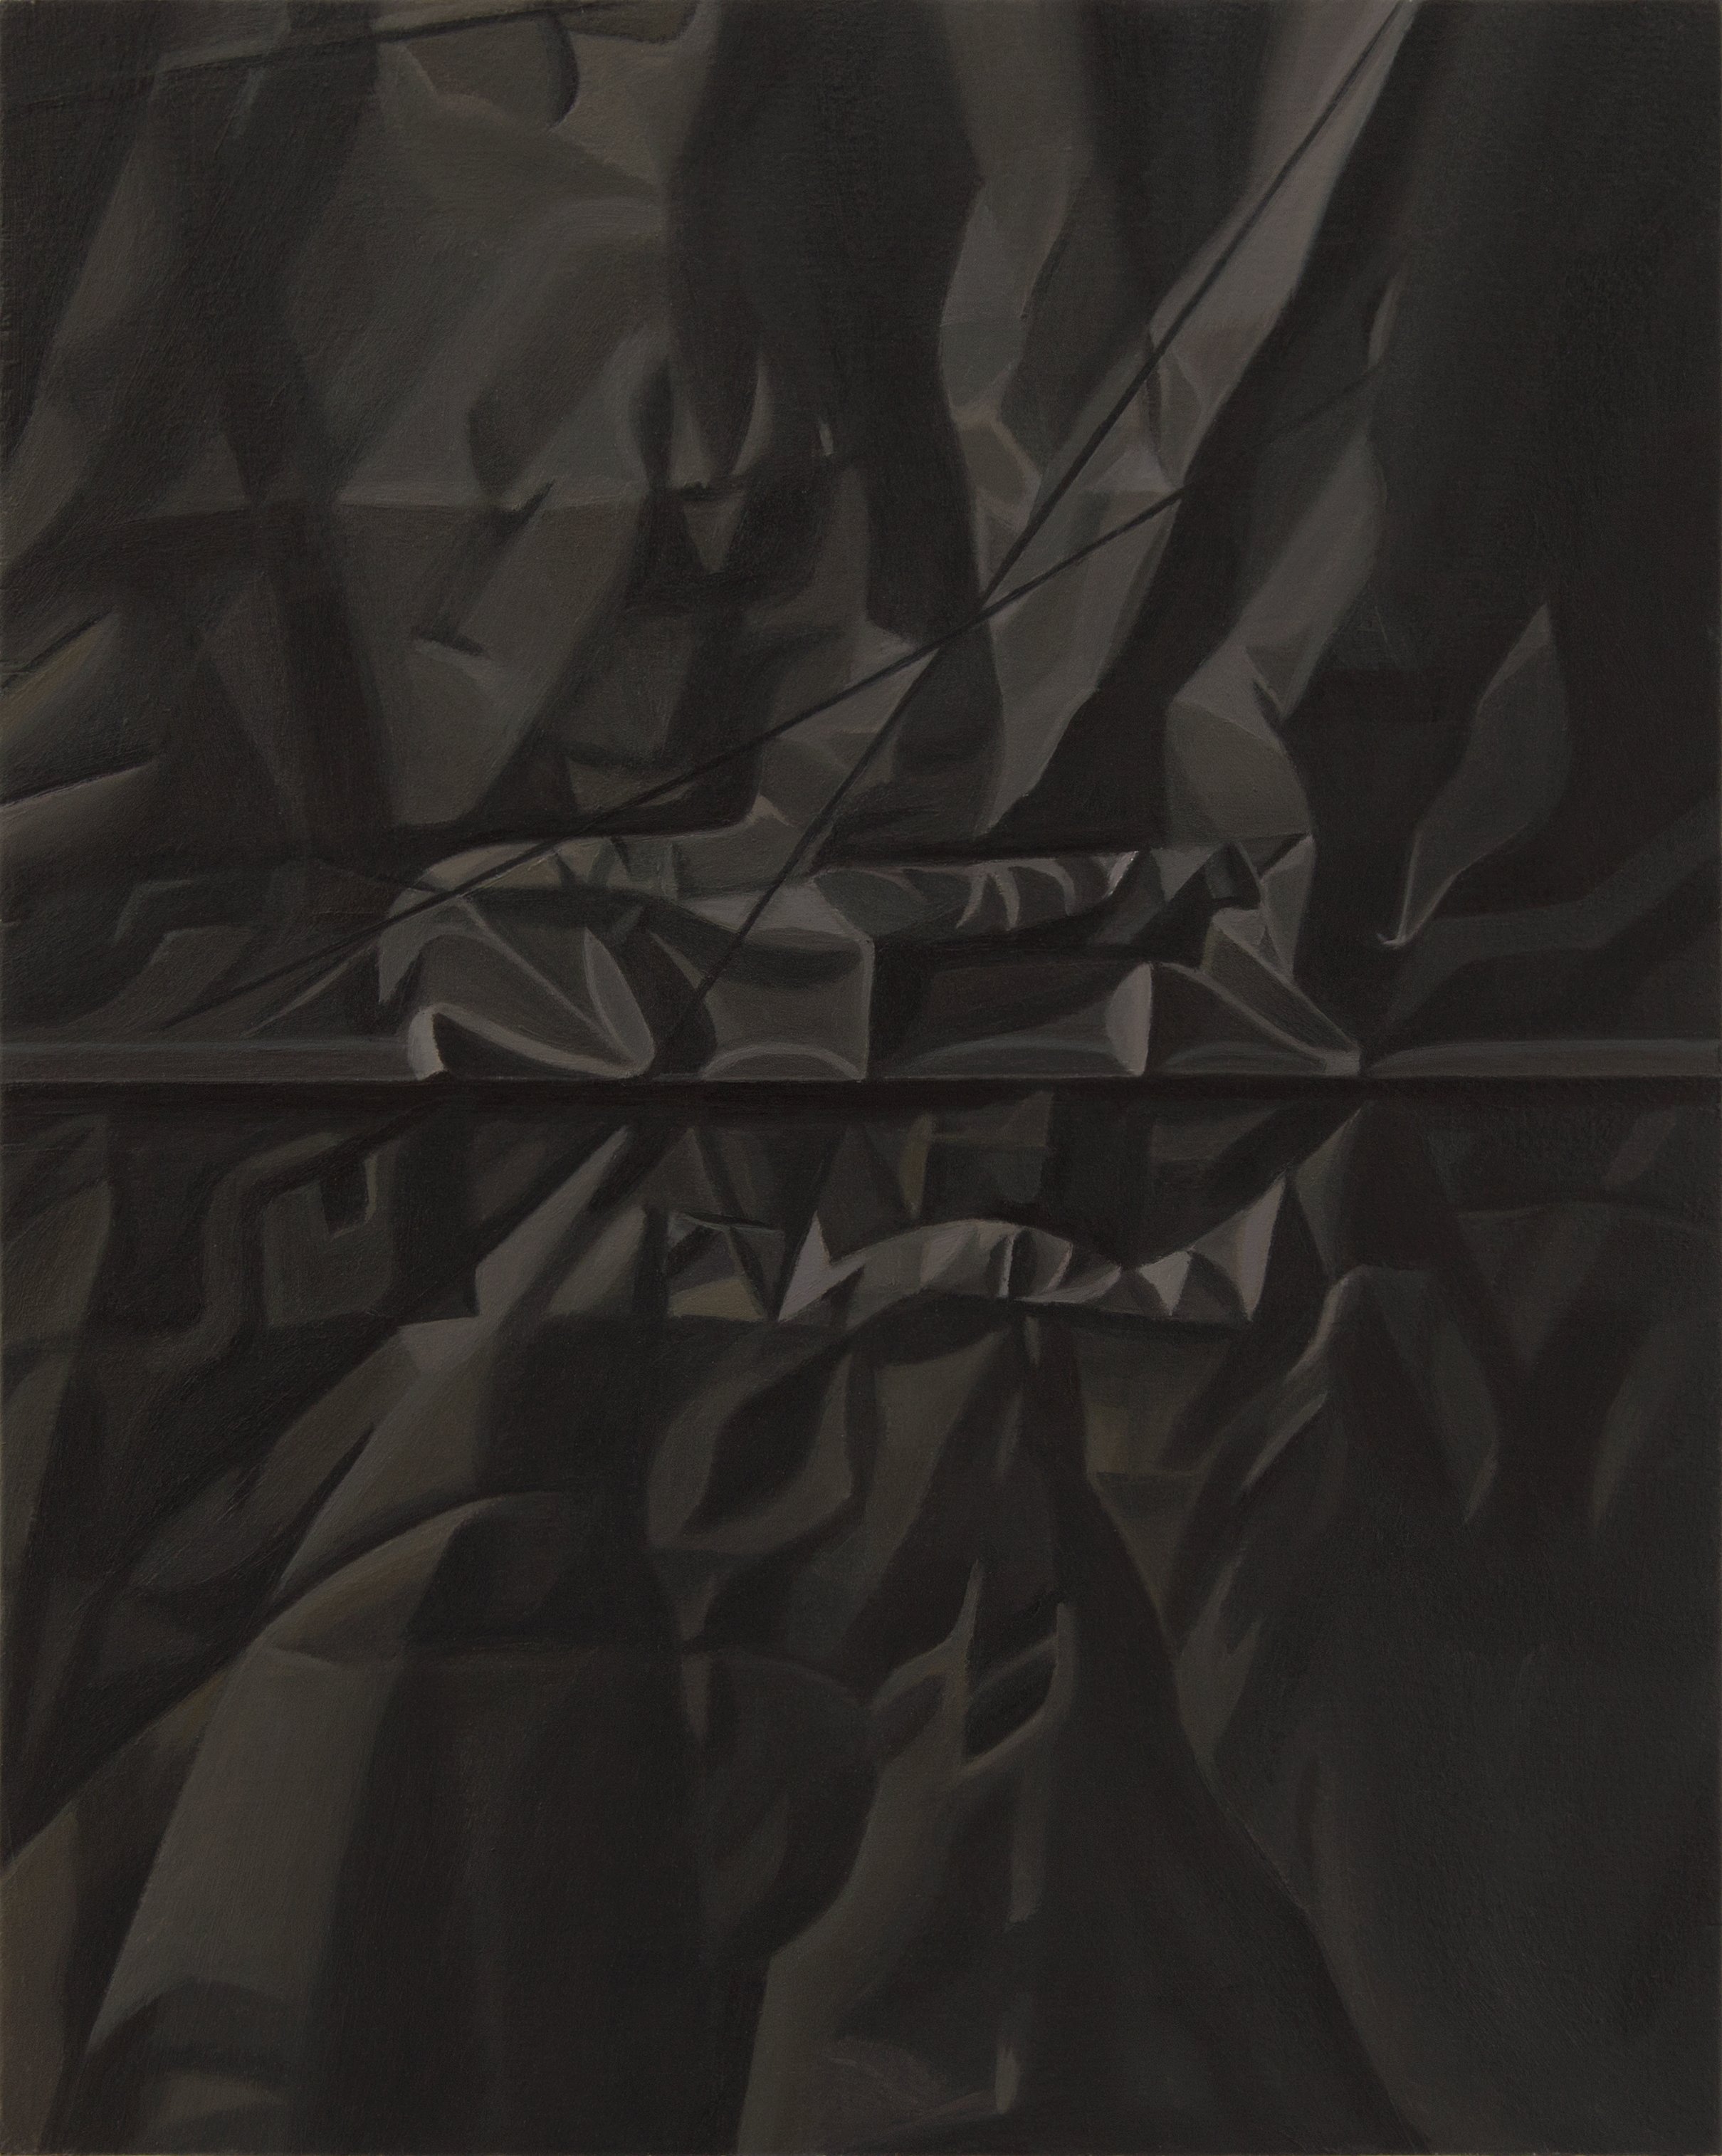  Untitled  8x10”, oil on panel, 2015   